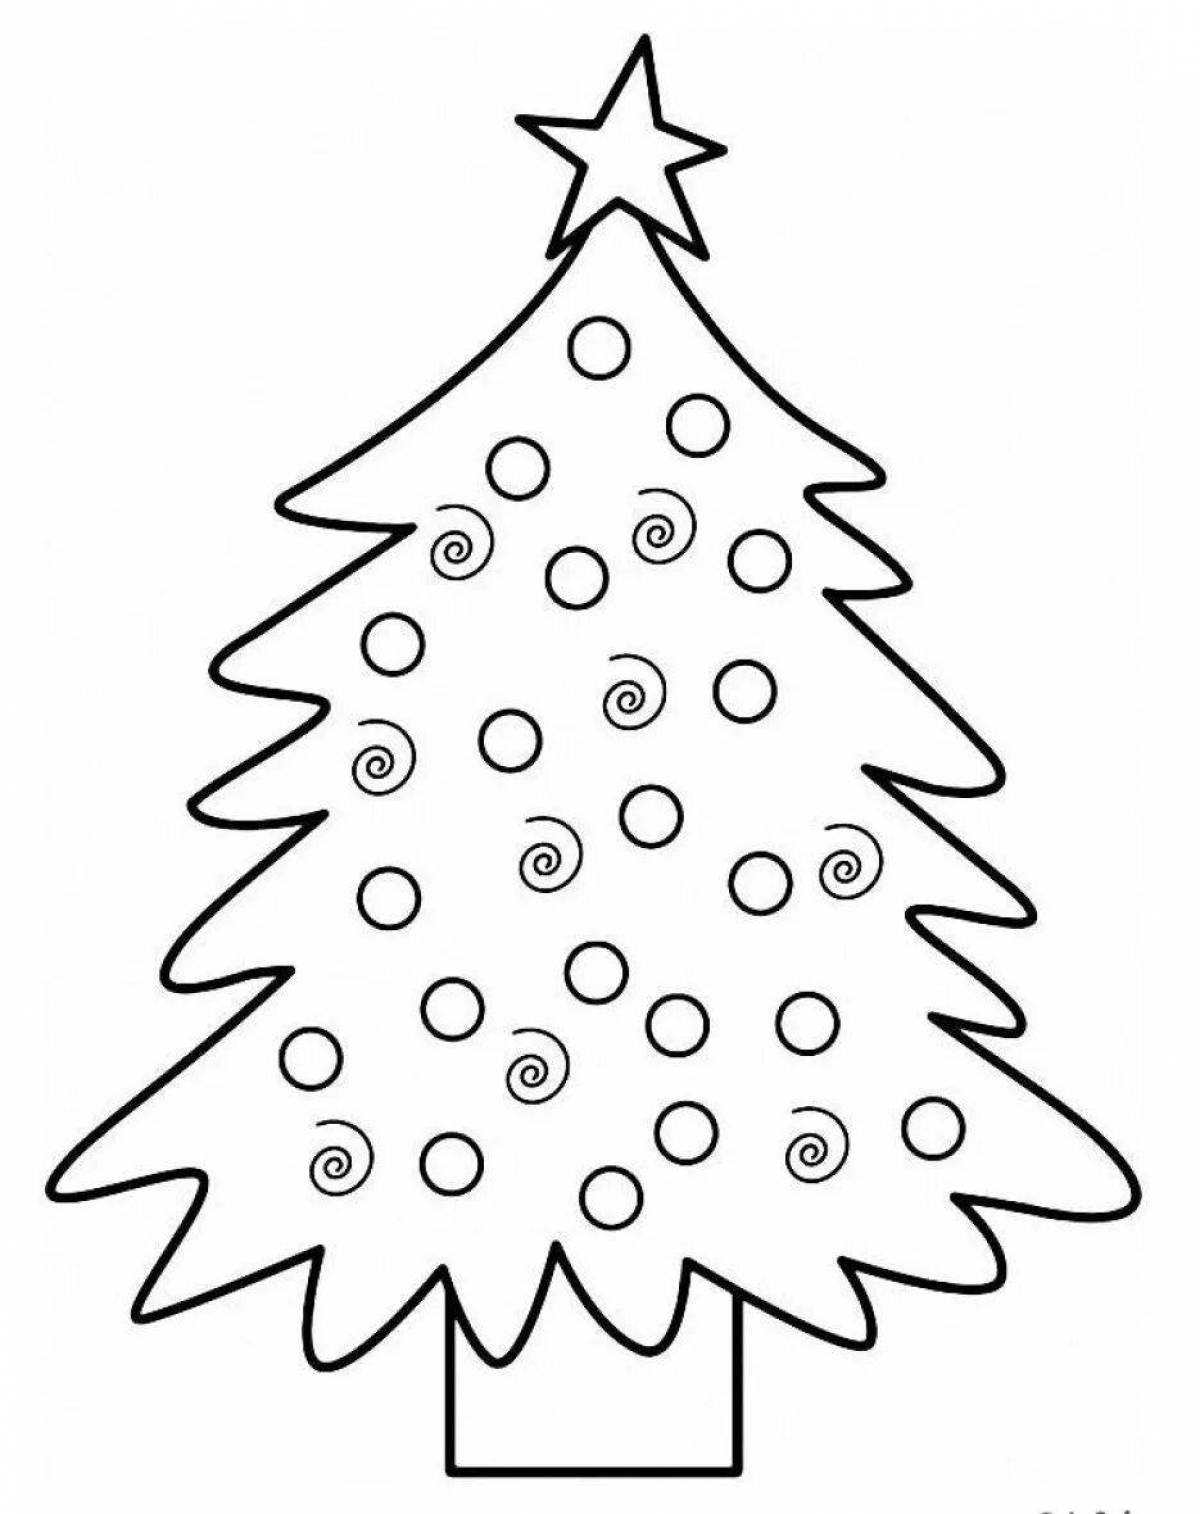 Animated Christmas tree with balls for kids